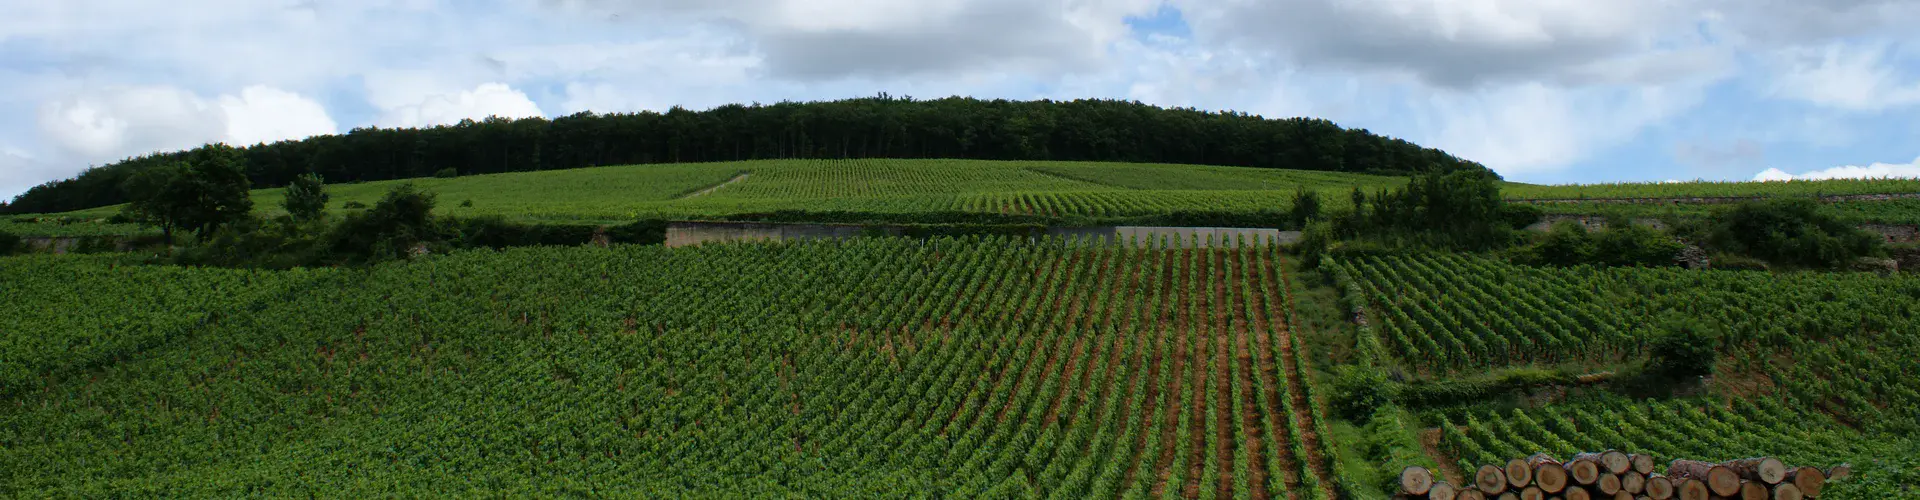 Vineyards in Beaune, Burgundy (Credit: Olivier Duquesne via Flickr)